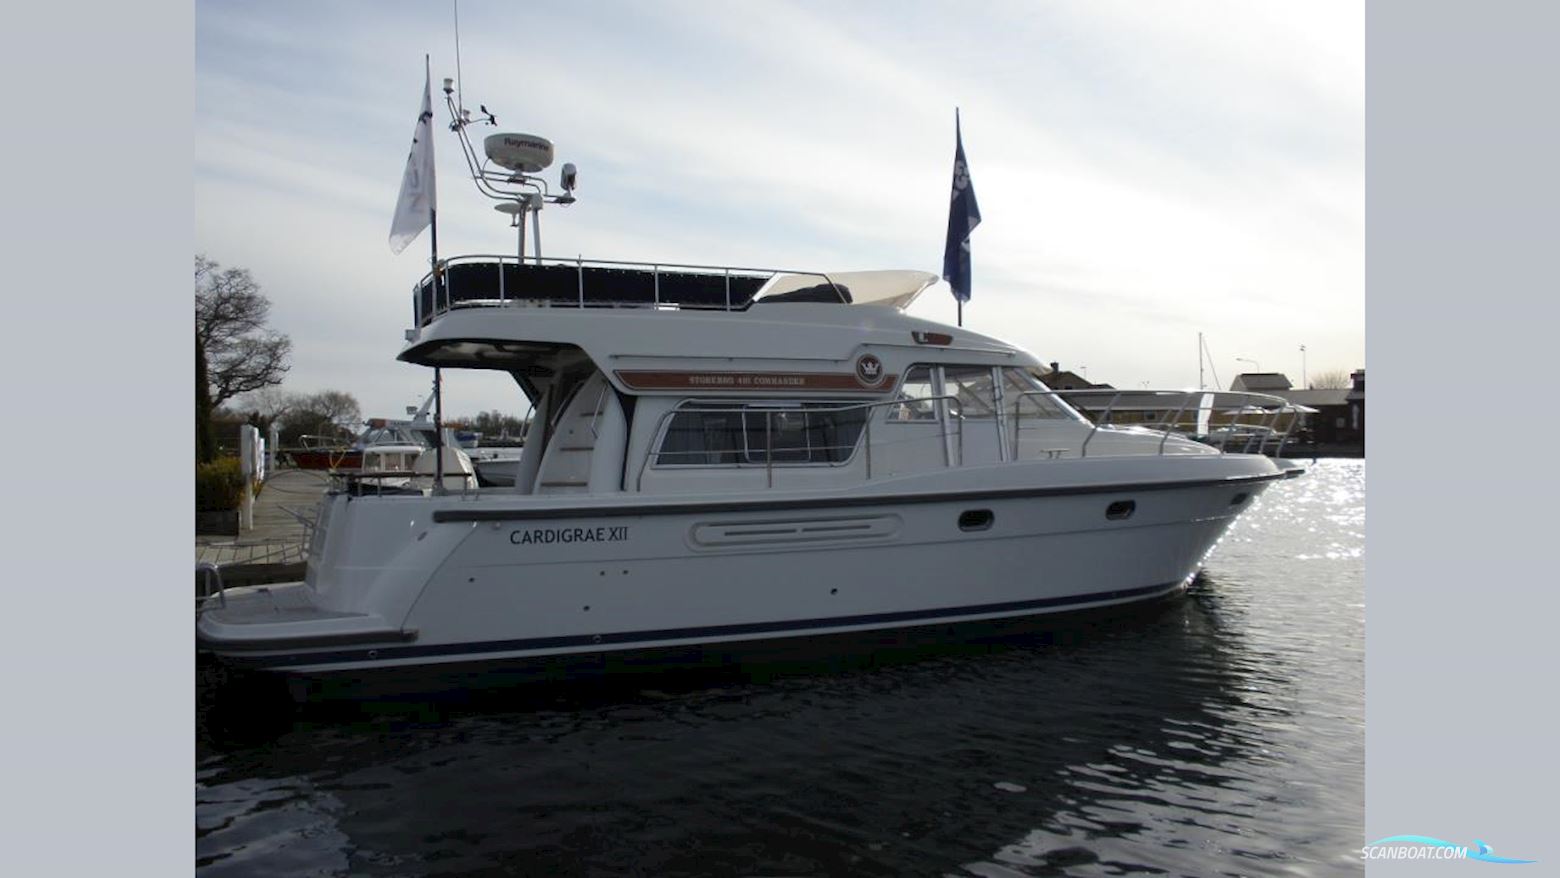 Storebro 410 Commander Motor boat 2009, with Volvo Penta engine, Sweden